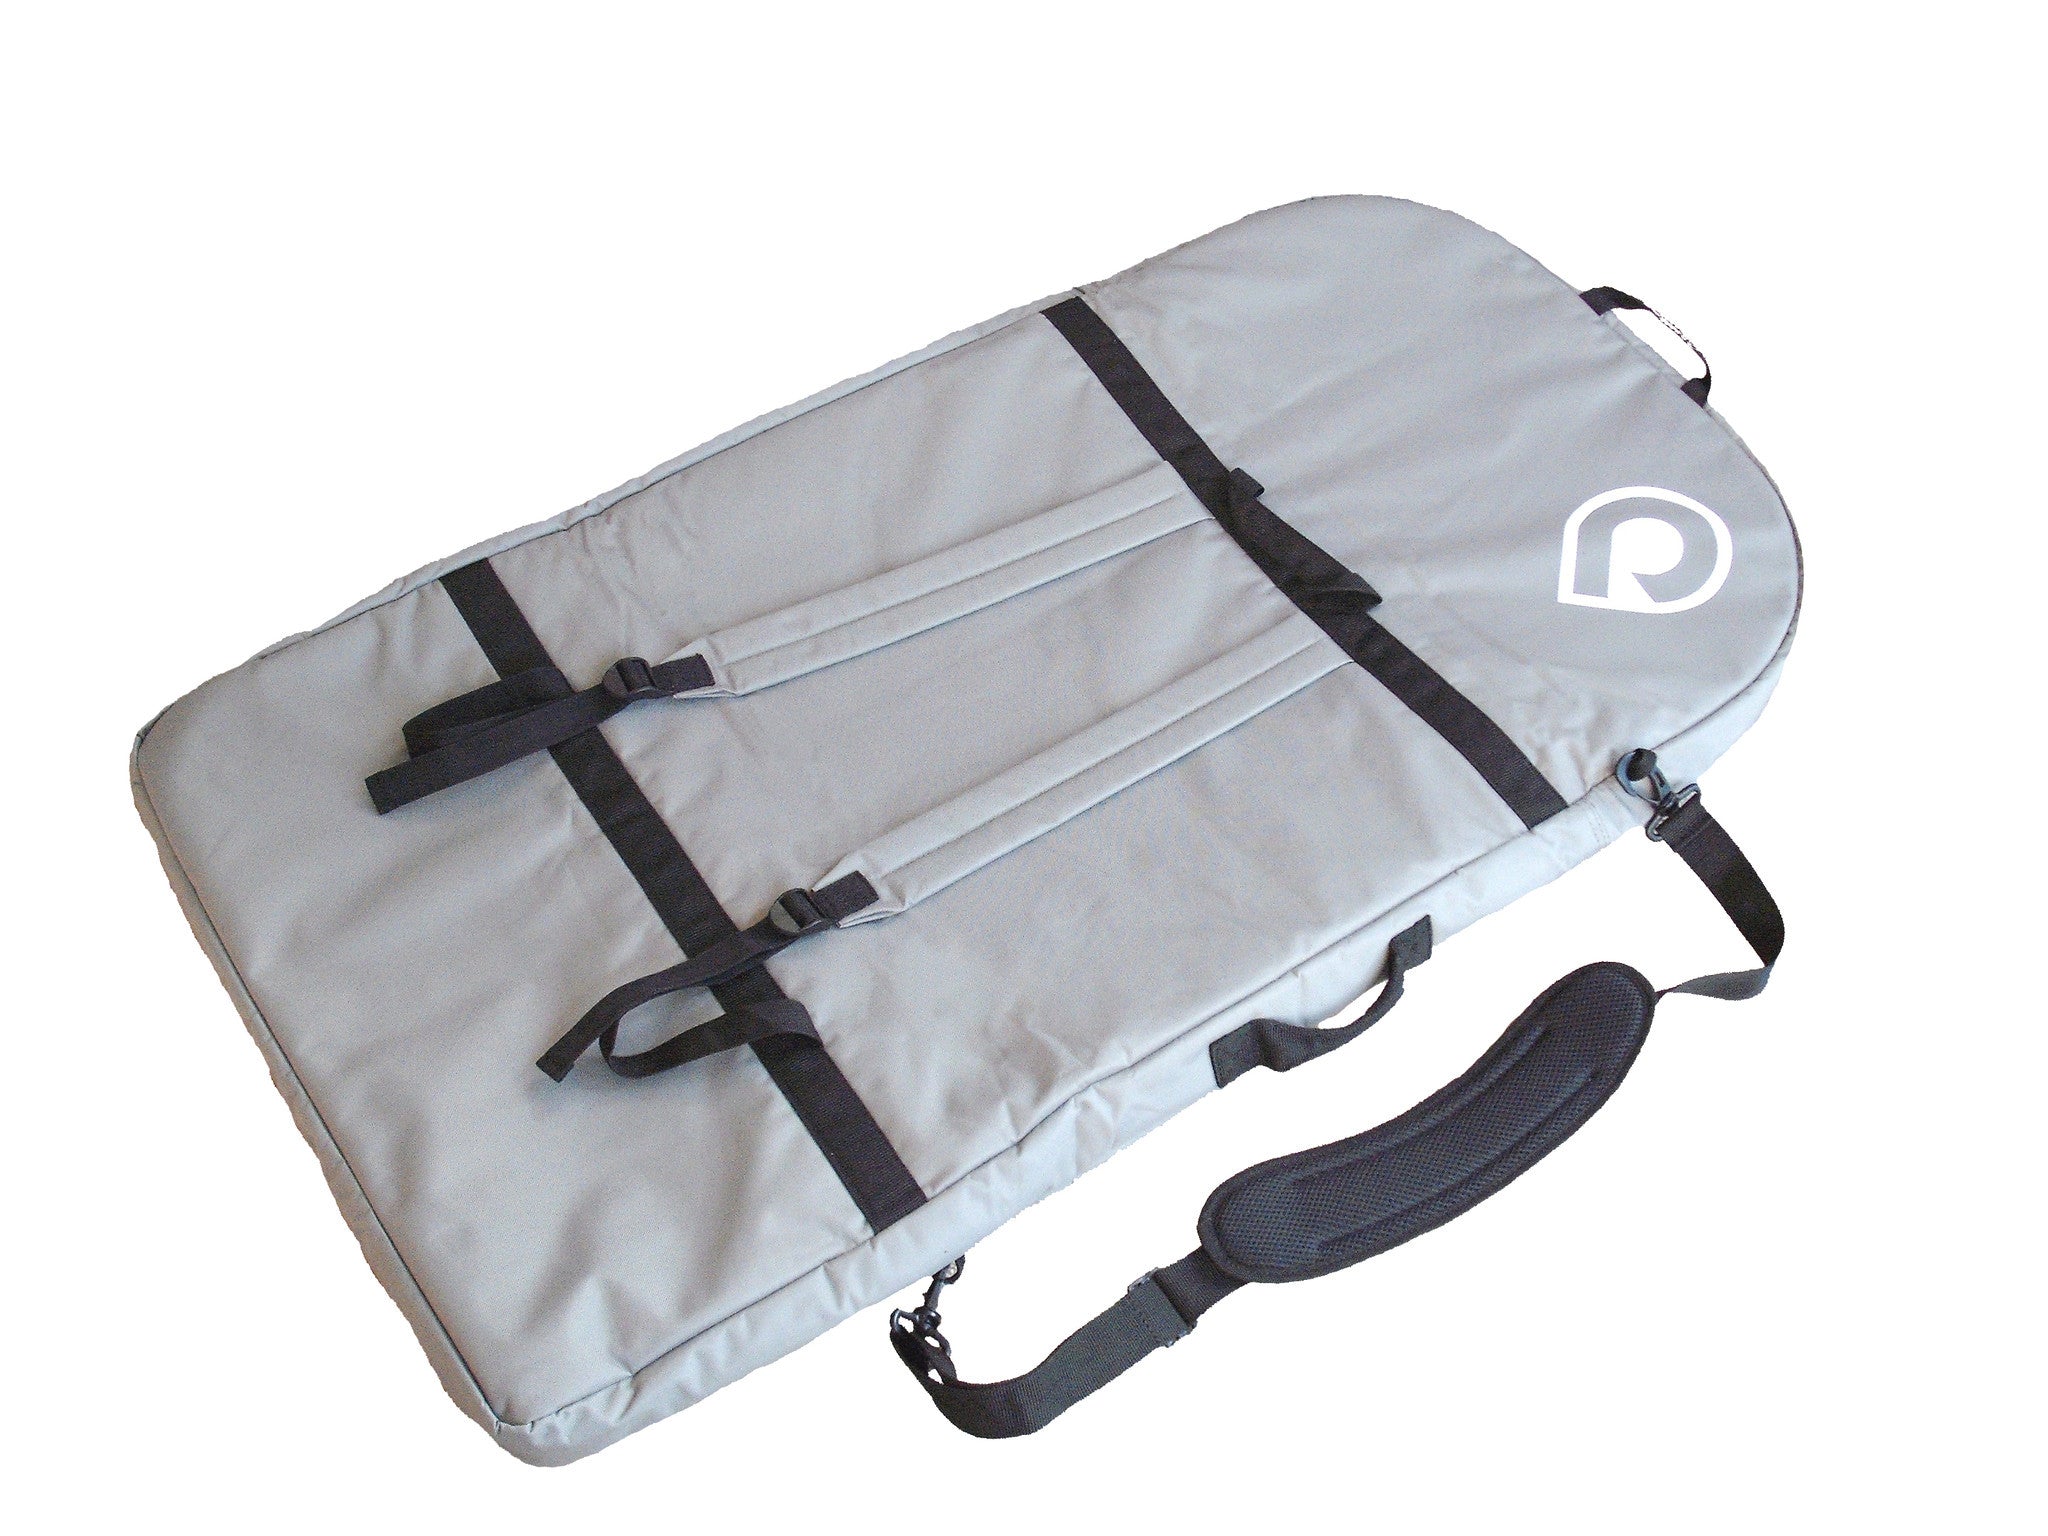 bodyboard bags australia, travel body board bag, bodyboard covers, boogie board bag | Curve ...